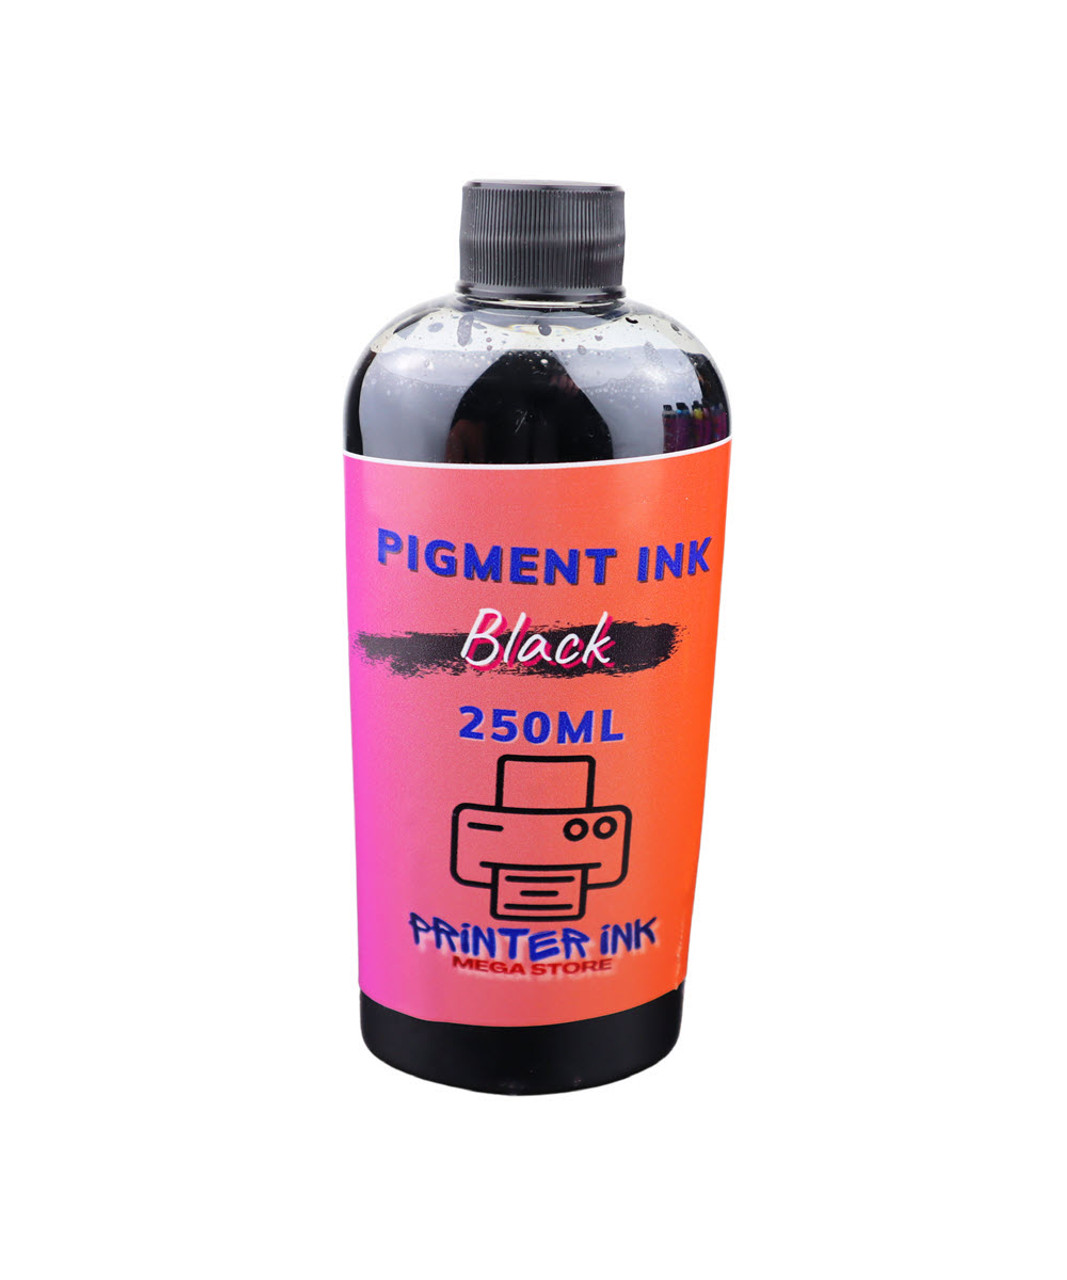 Black Pigment Ink 250ml bottle for Epson WorkForce WF-2750 WF-2760 printers